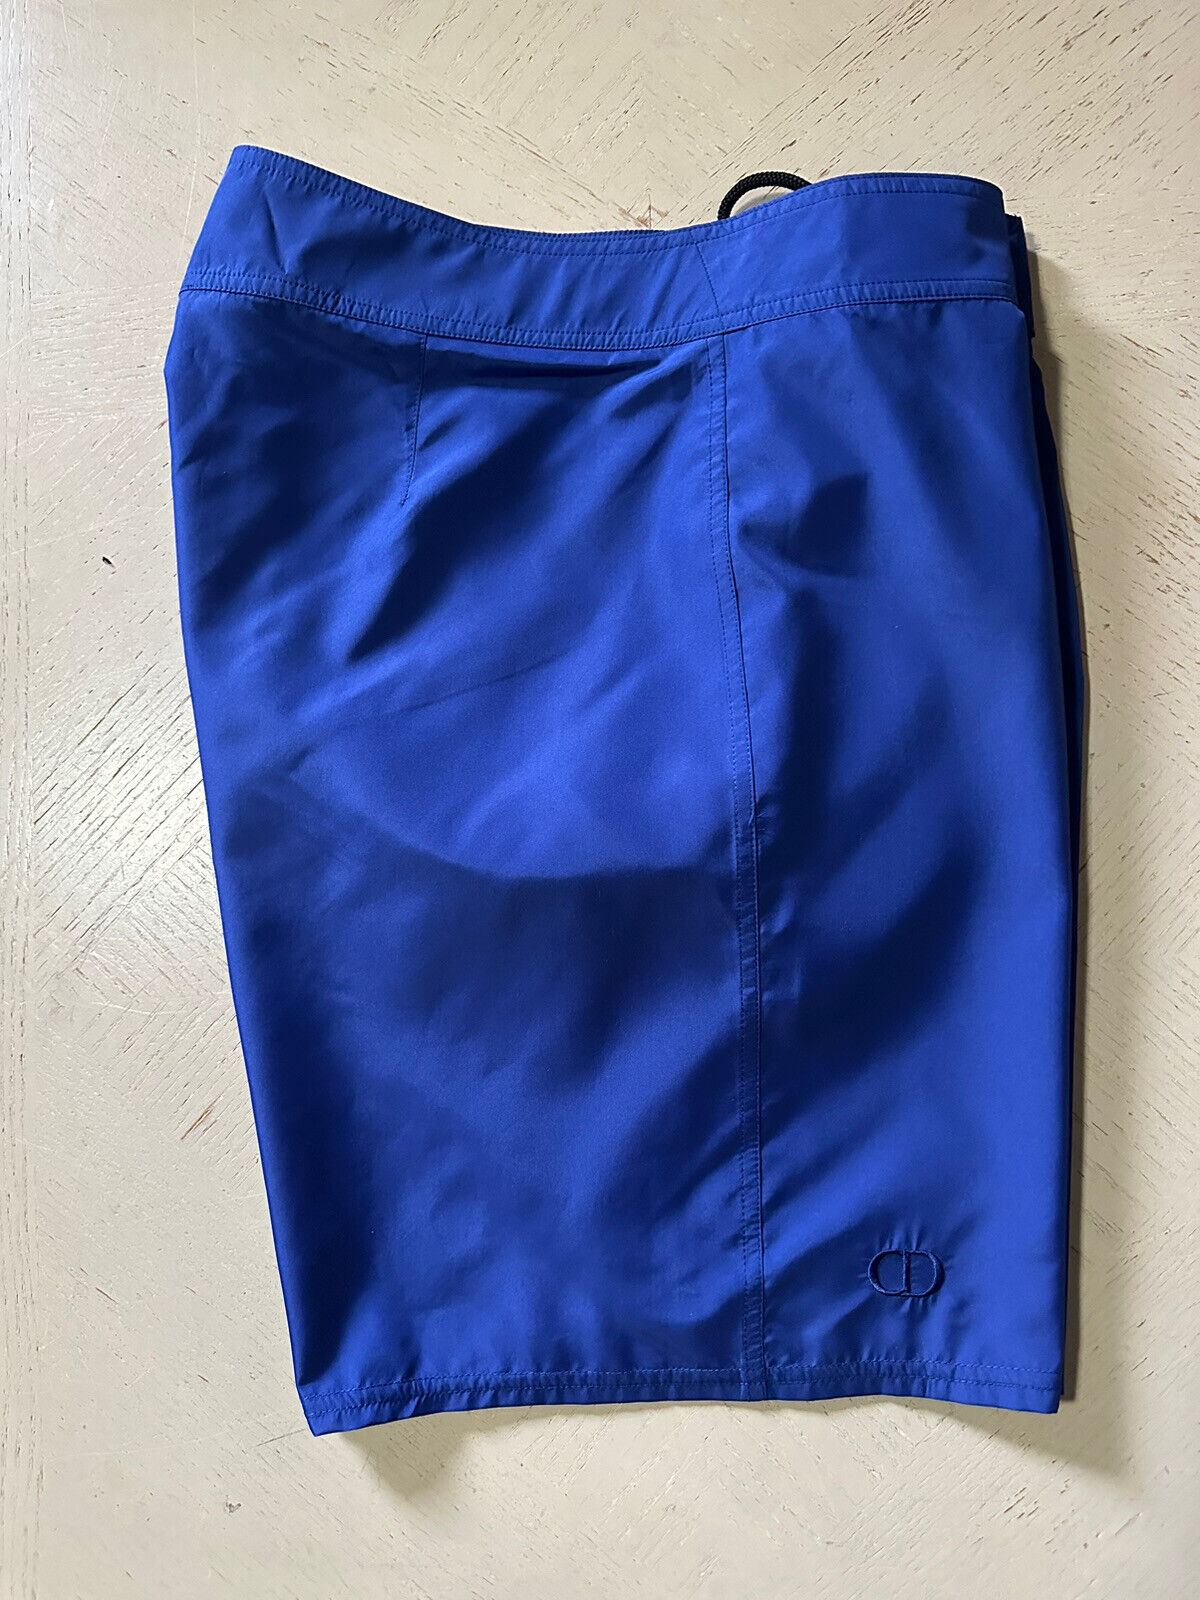 NWT $790 Шорты для плавания DIOR на шнурке, синие, размер XL